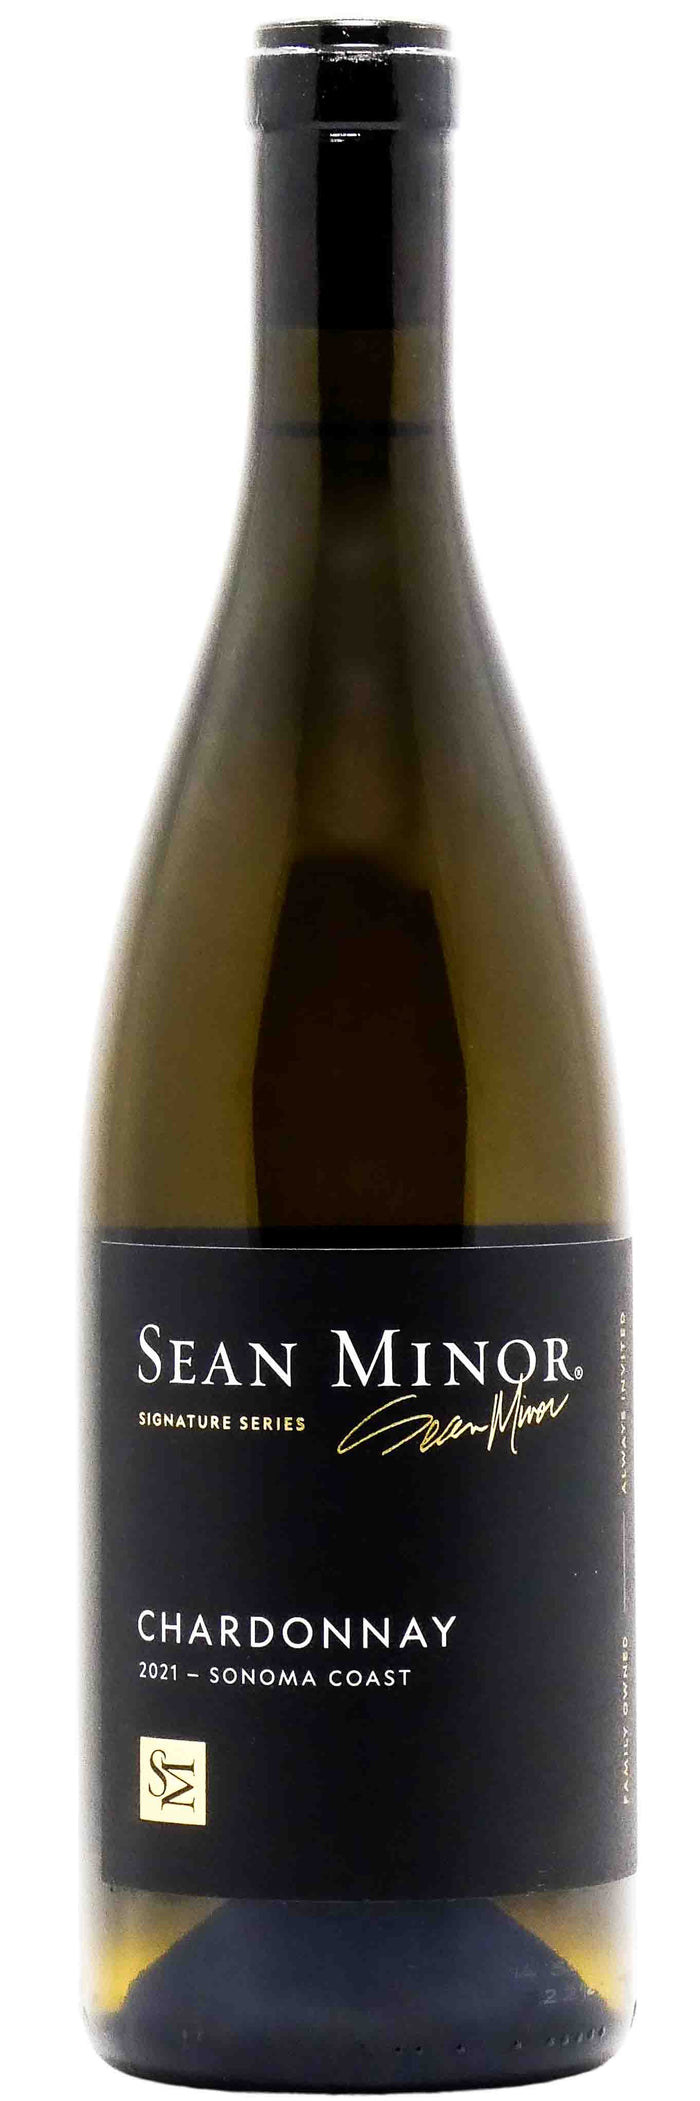 Sean Minor Chardonnay Sonoma Coast 2021